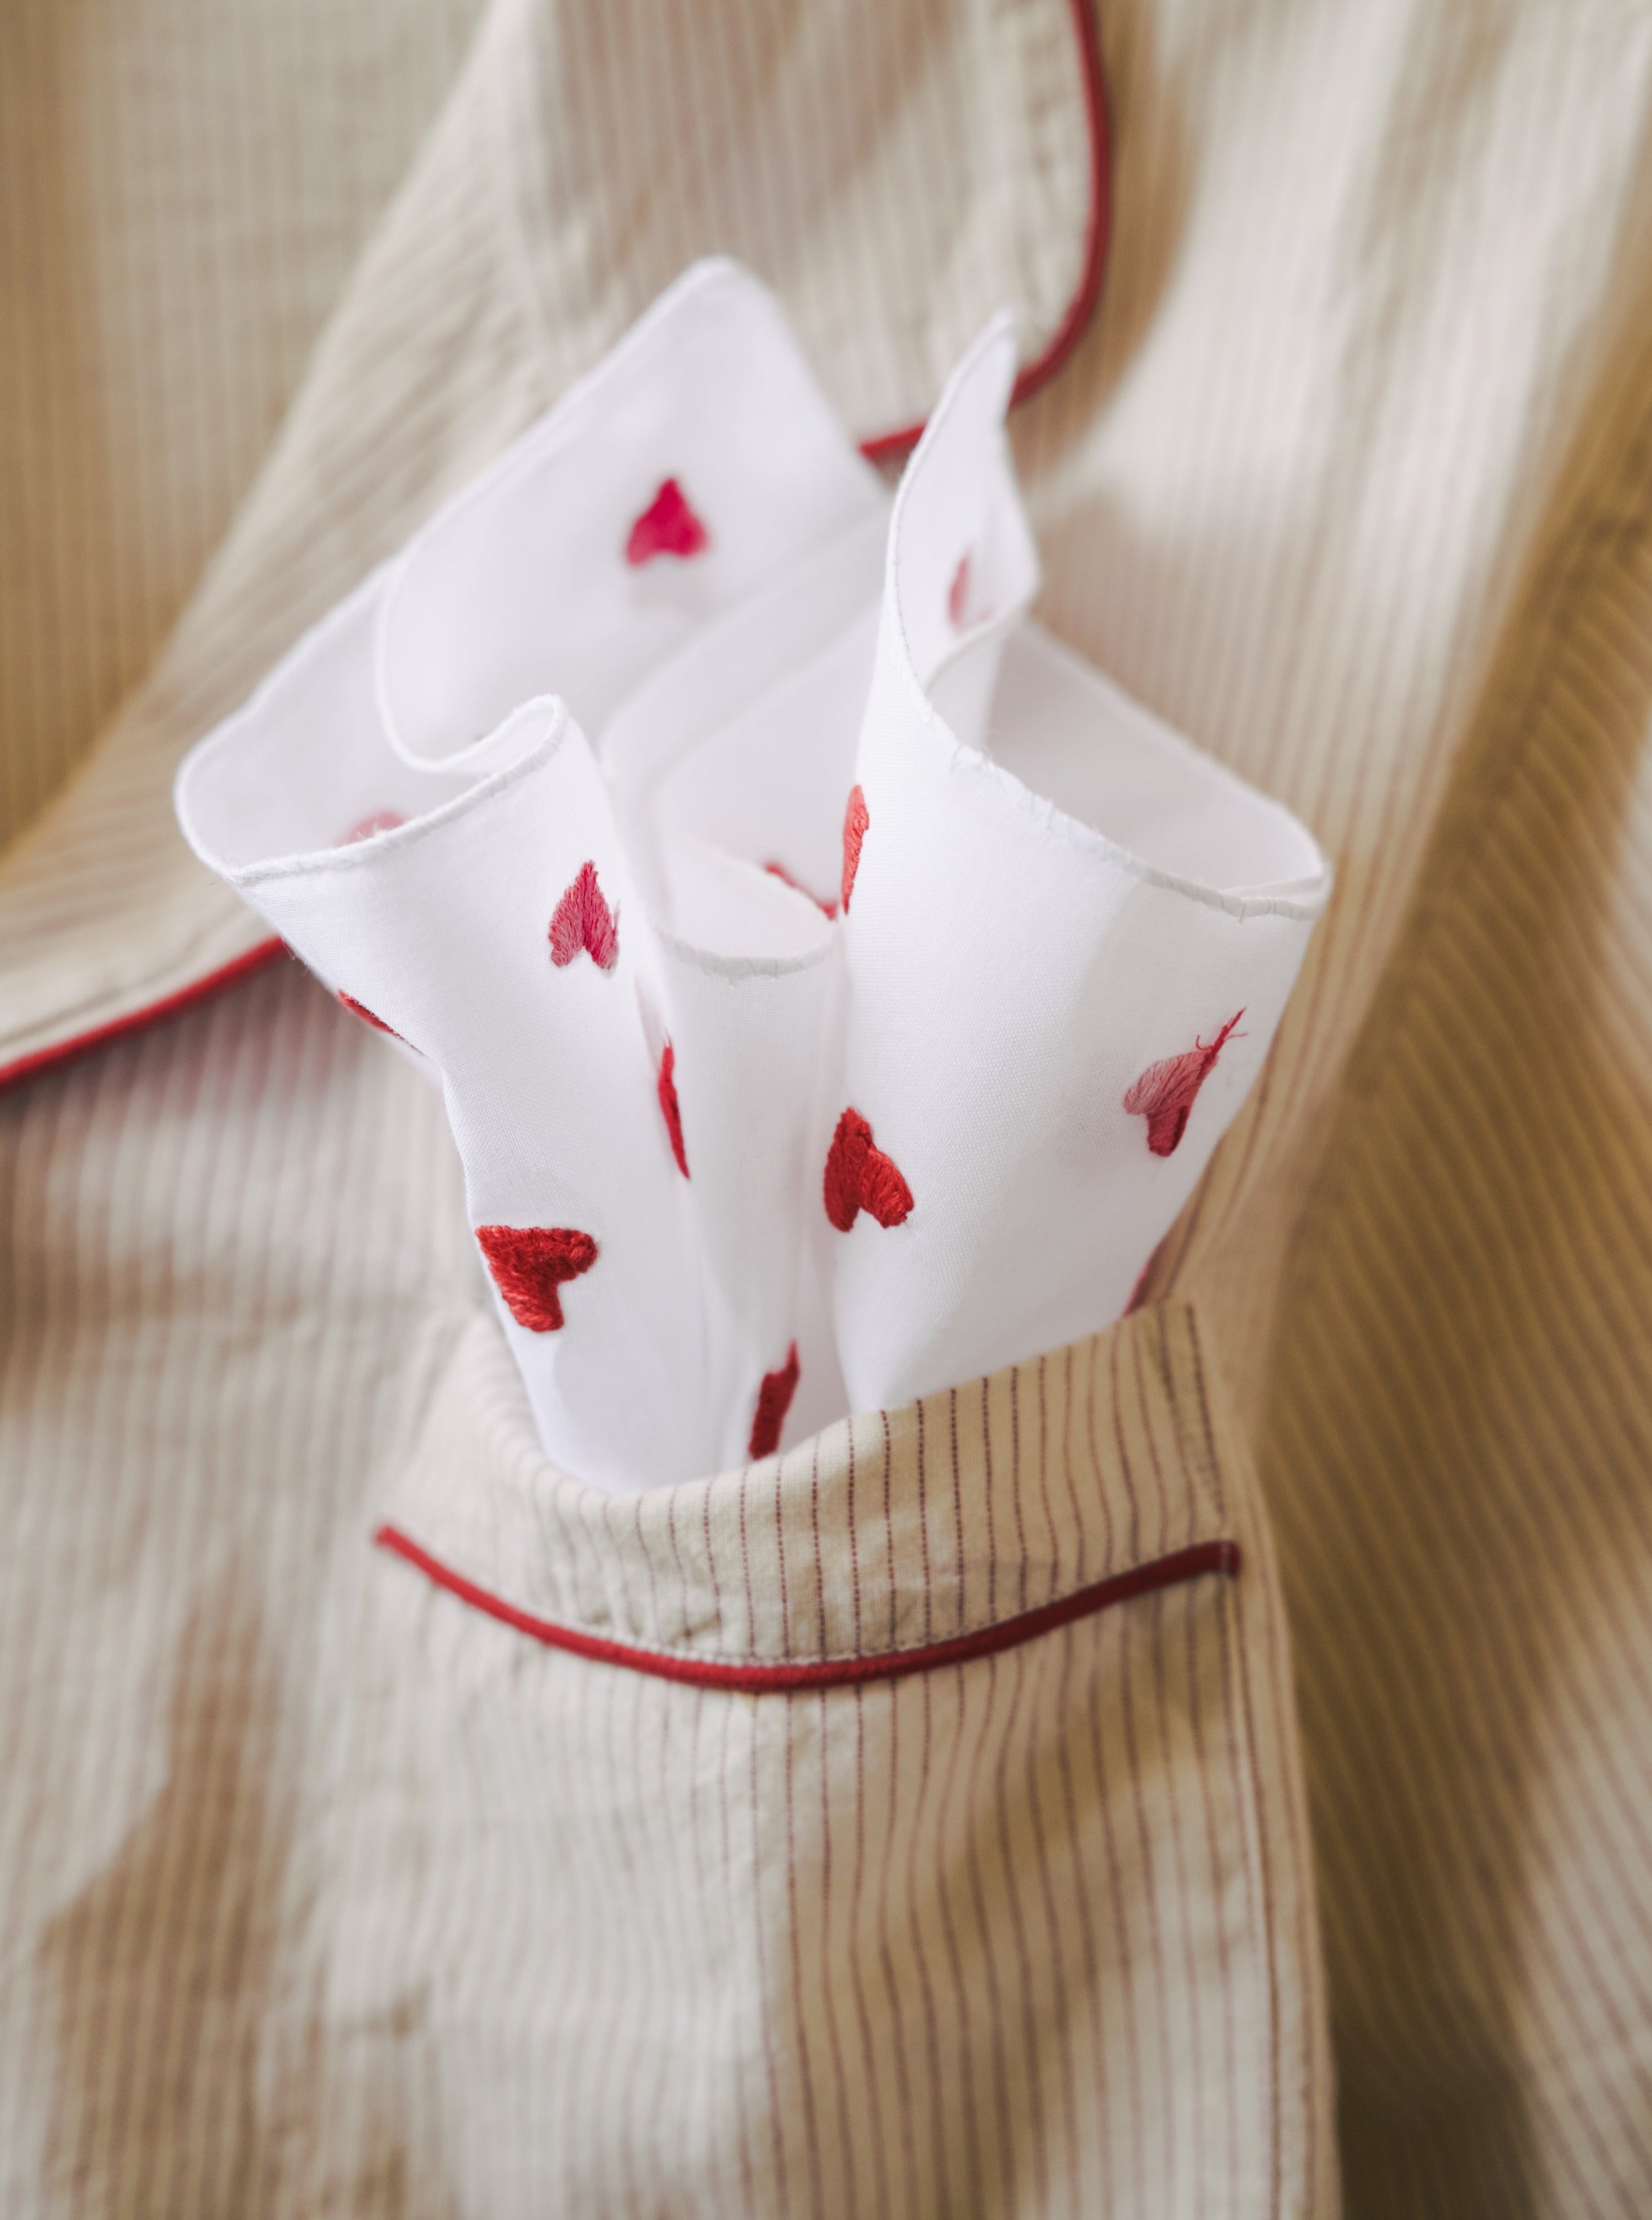 Handkerchief Valentine